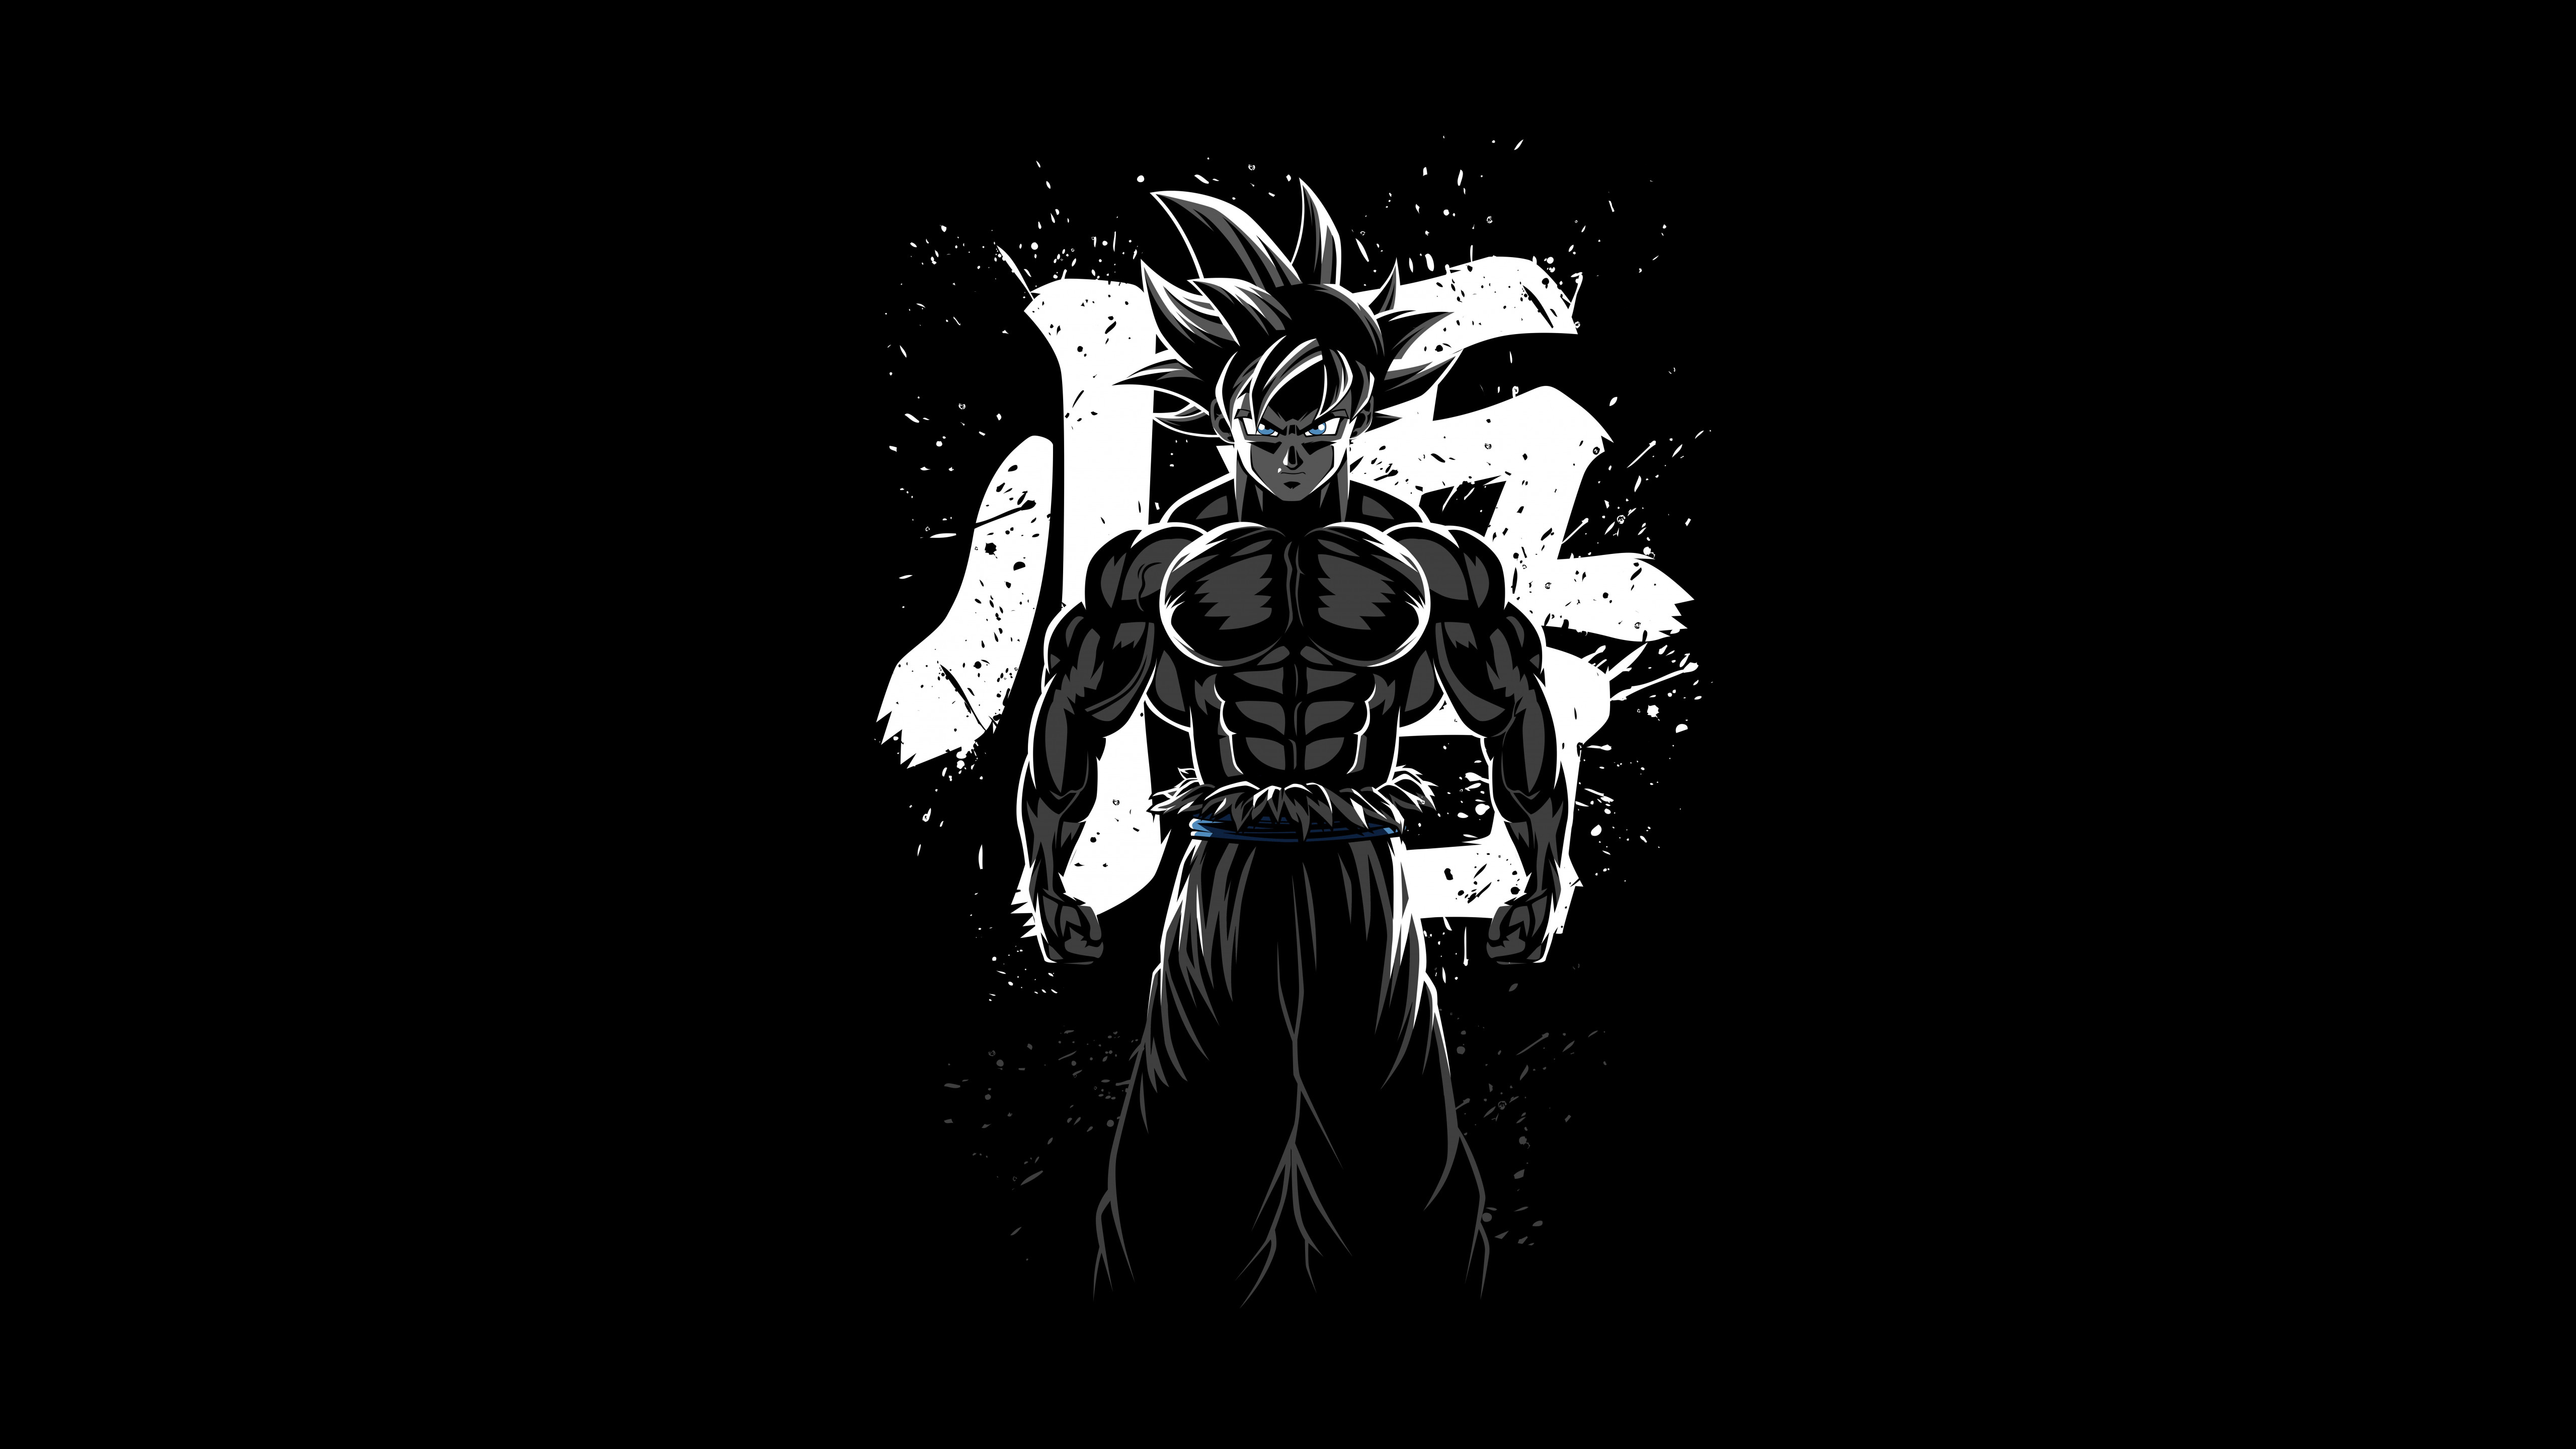 Goku Musculoso Wallpaper 4K, Dragon Ball Z, AMOLED, Minimal, Black Background, Black Dark